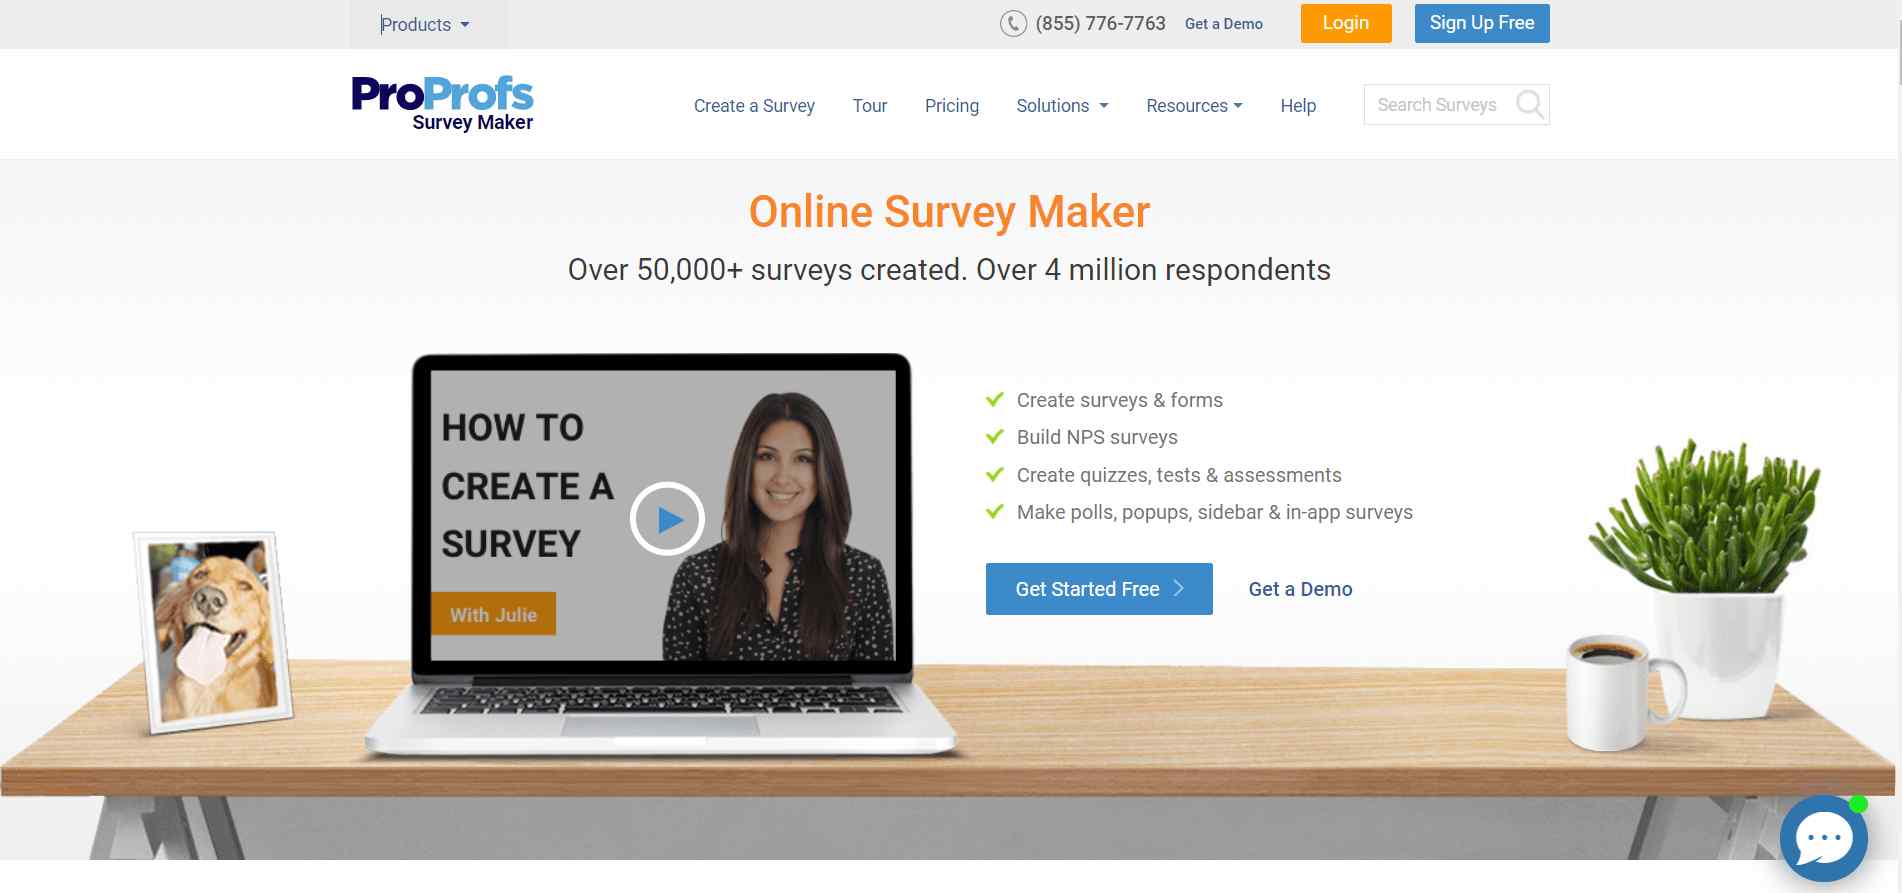 ProProfs Survey Maker customer experience tool